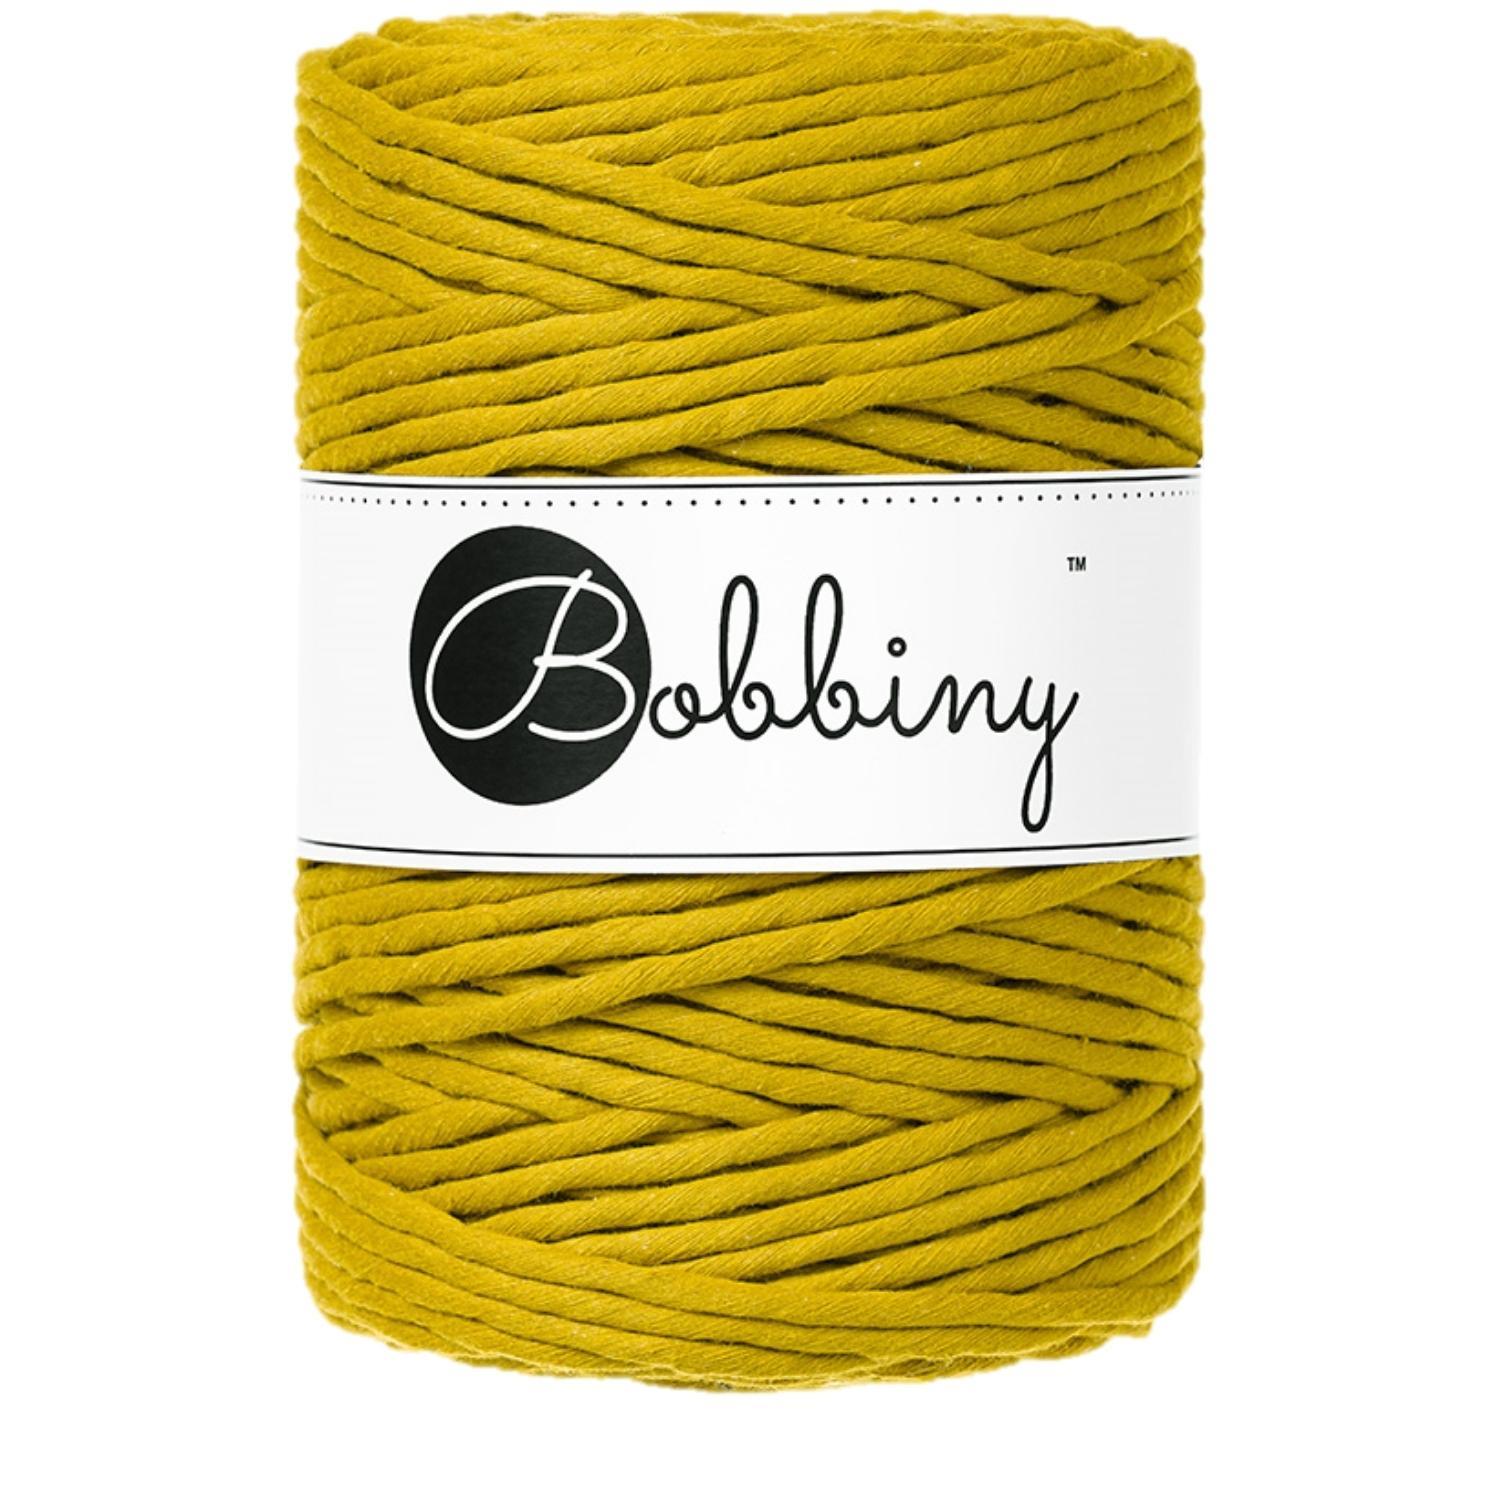 Spicy Yellow 5mm macrame cord bobbiny